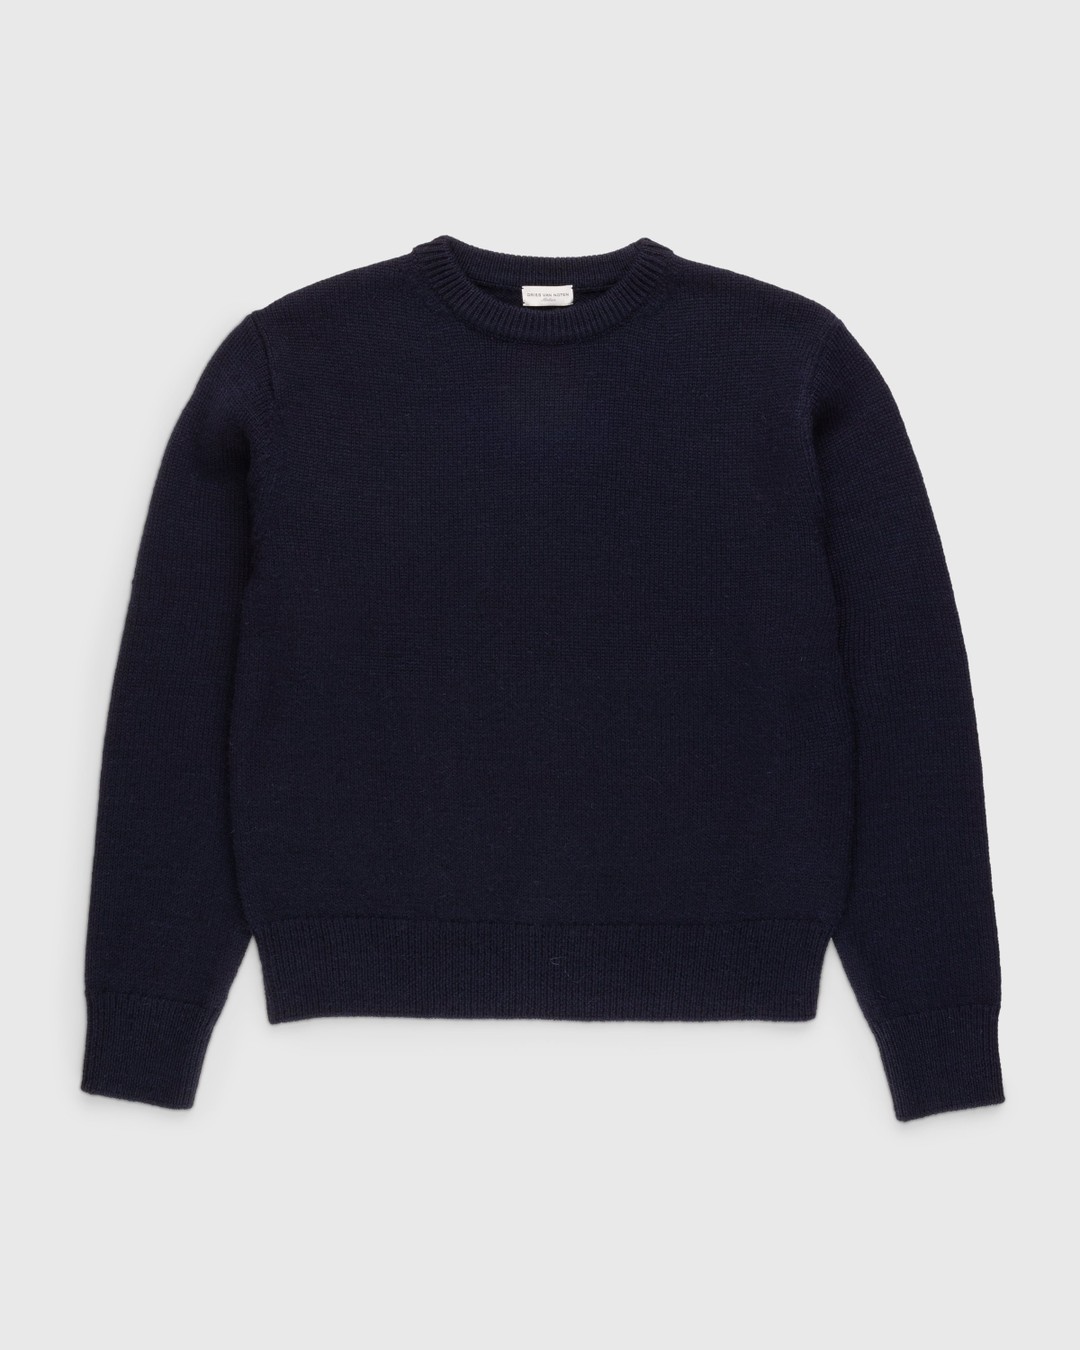 Dries van Noten – Nelson Sweater Blue - Sweatshirts - Blue - Image 1